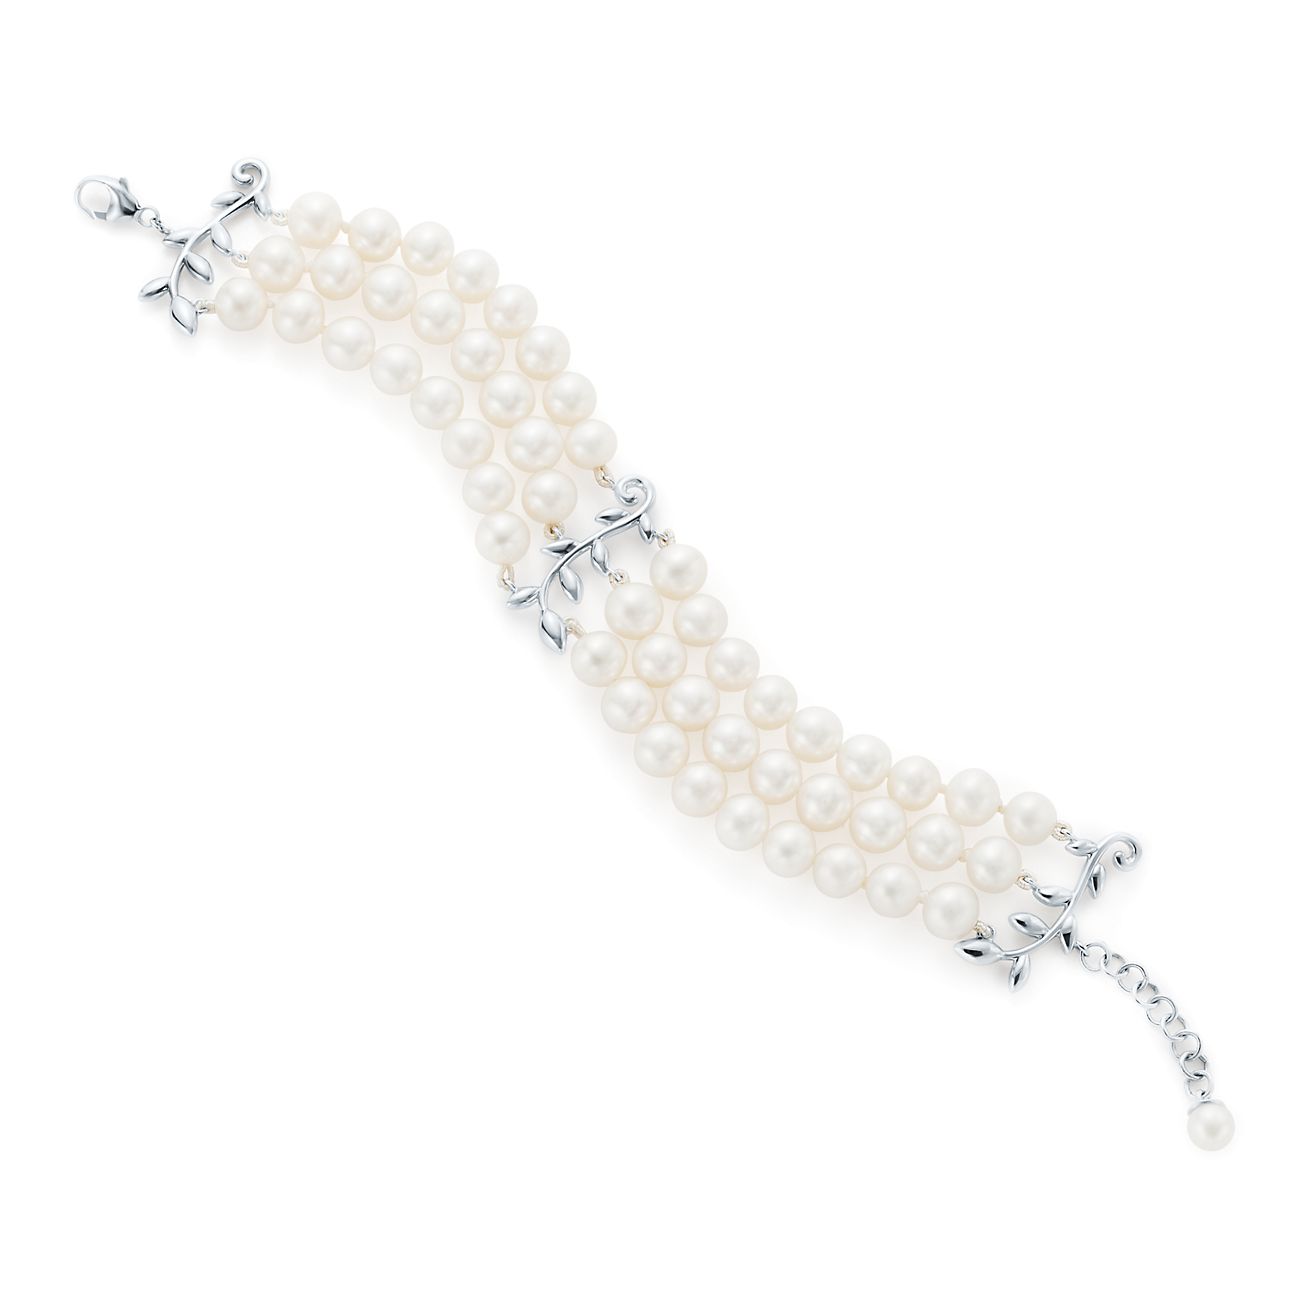 Buy Real Pearl Necklace Bracelet Earrings Set-genuine Cultured AA 8-8.5mm  White Fresh Water Pearl Wedding 3 Row Necklace Bracelet Earring Online in  India - Etsy